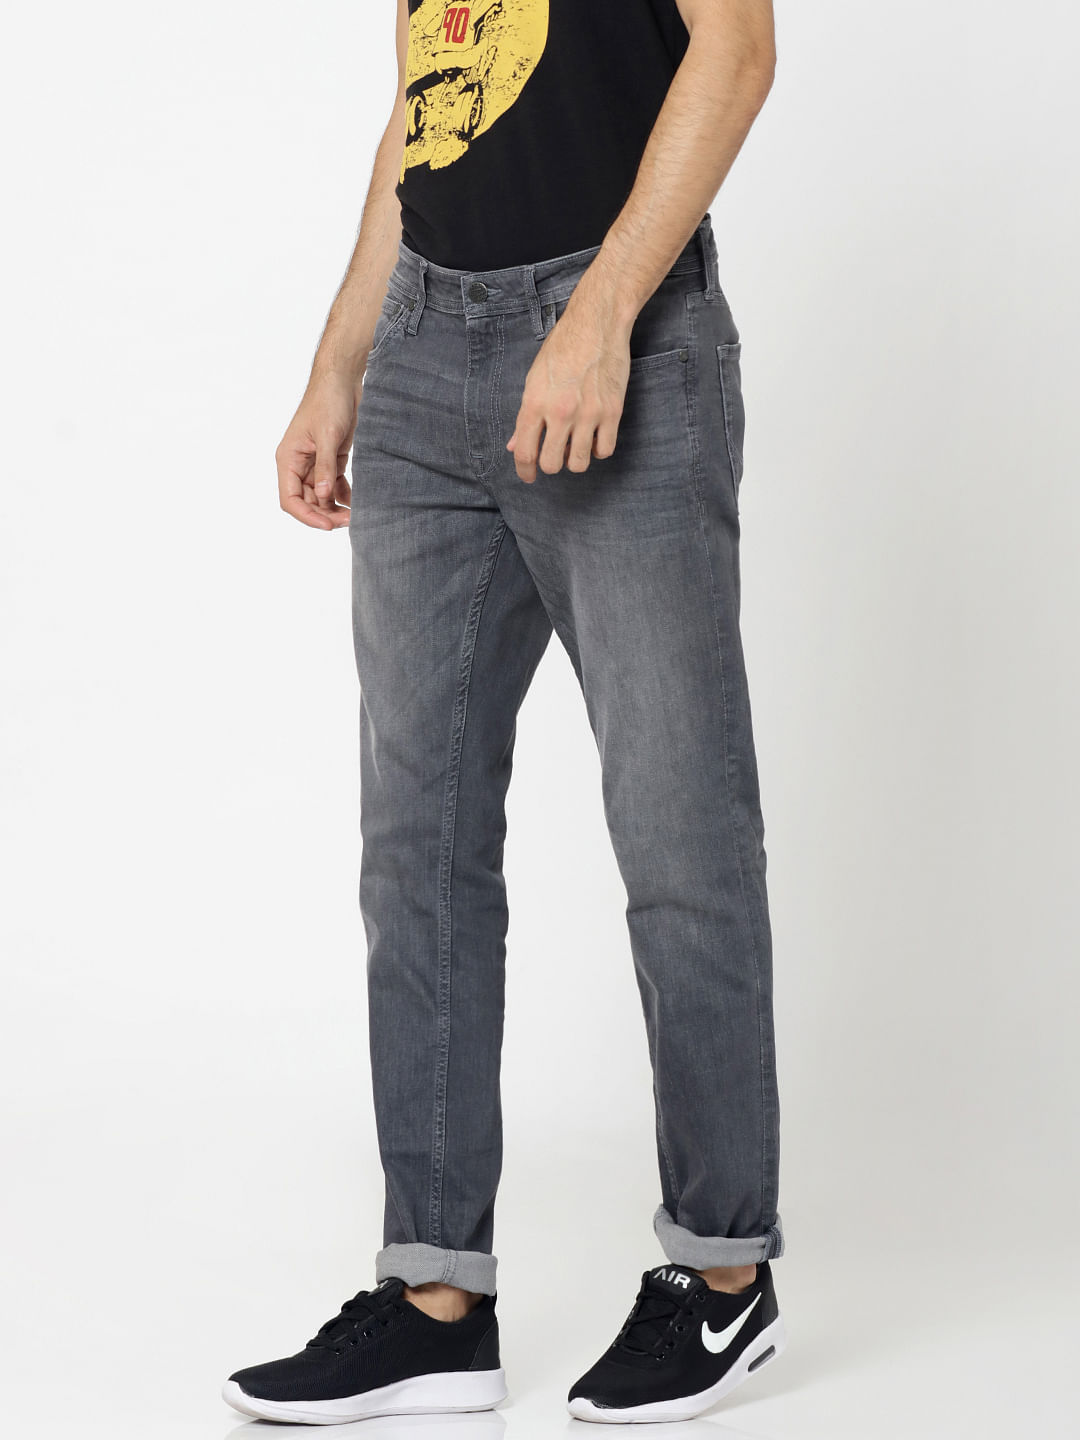 Ankle Fit Shady Grey Denim Jeans For Men - Peplos Jeans – Peplos Jeans